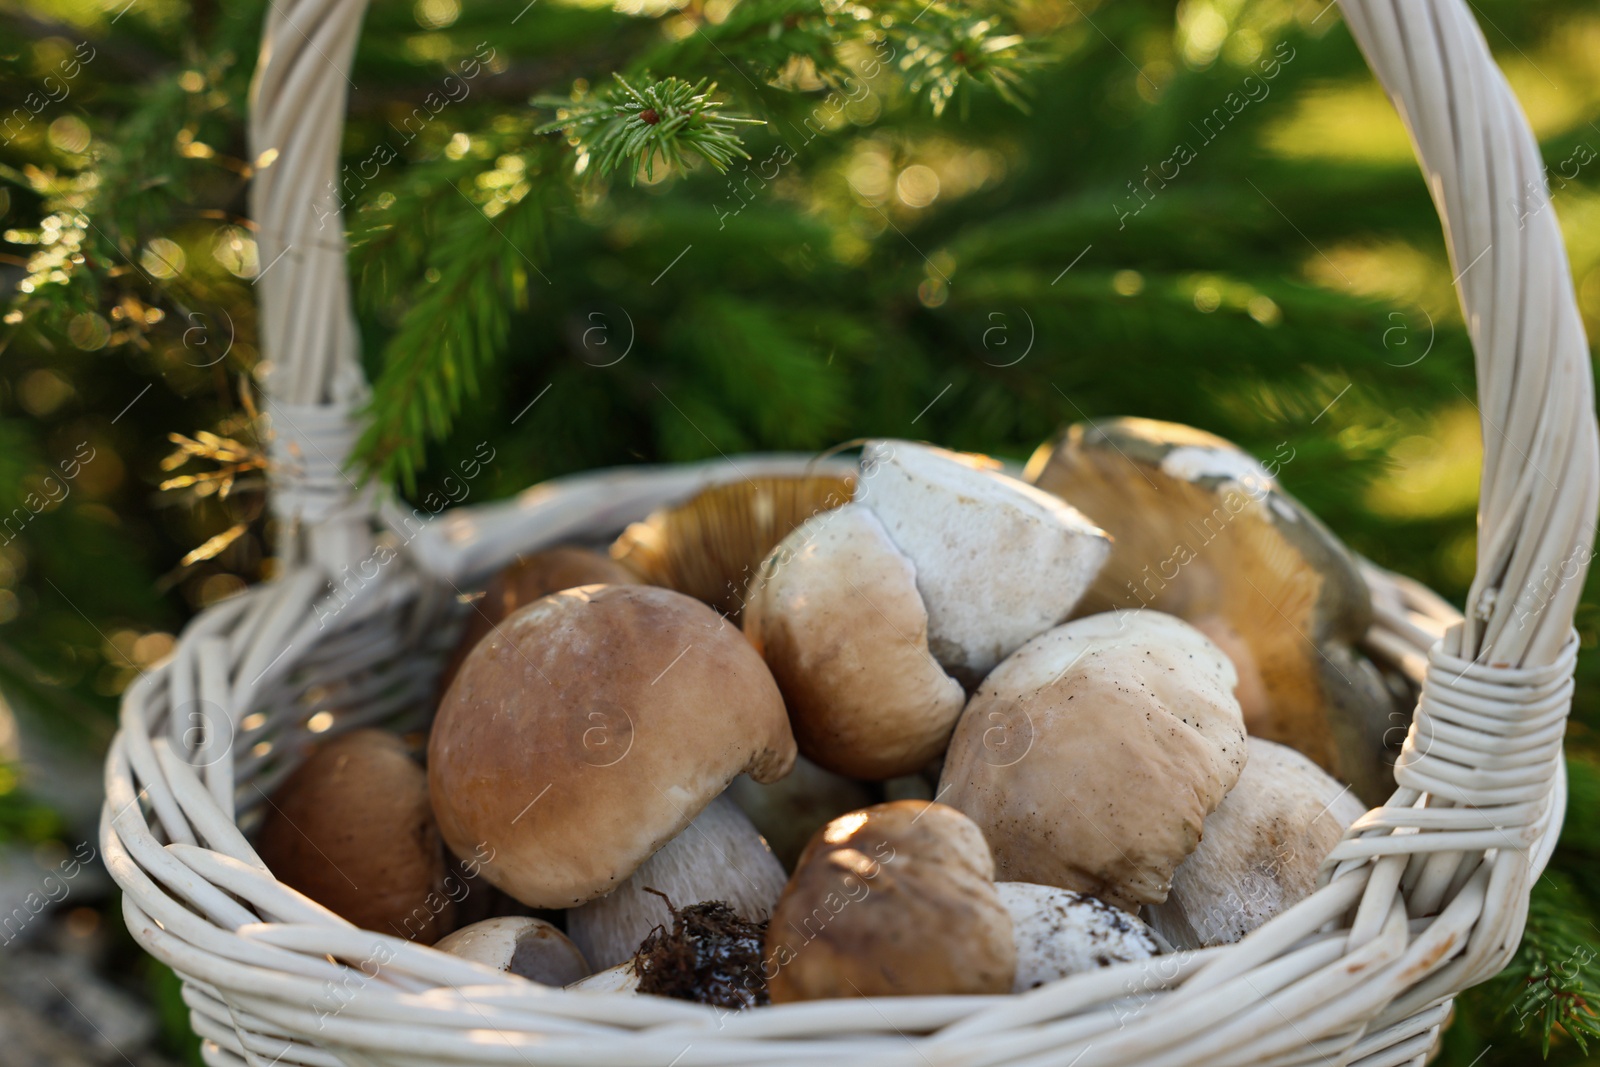 Photo of Basket full of fresh mushrooms outdoors, closeup